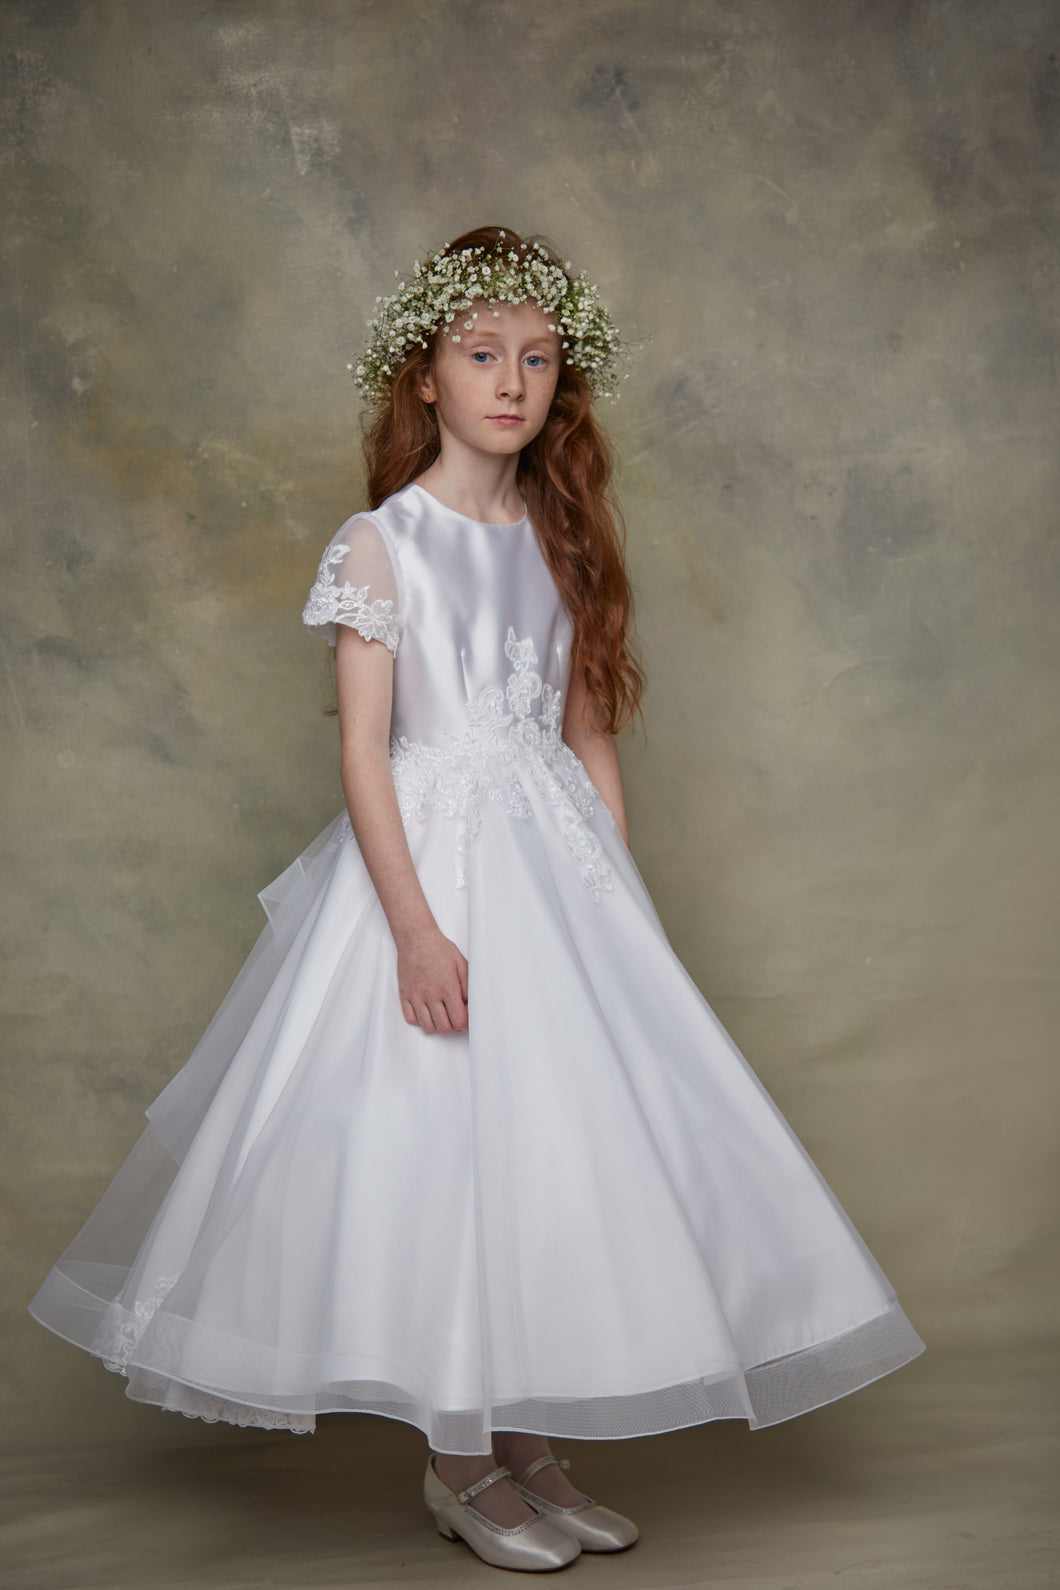 SALE COMMUNION DRESS Isabella Girls White Communion Dress:- IS23478 AGE 6, 7 & 8